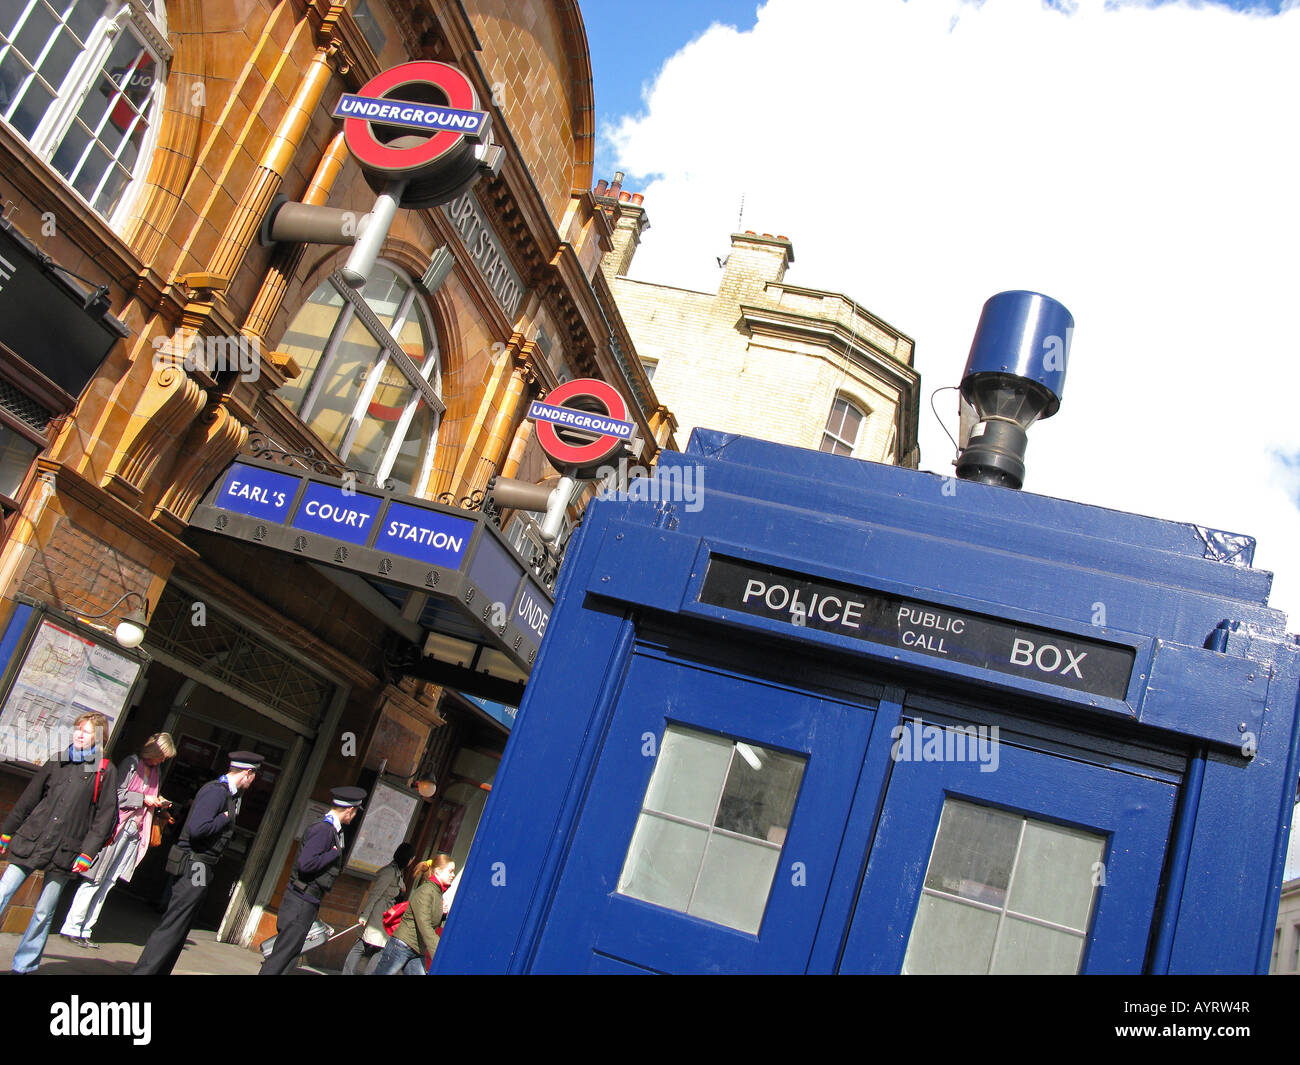 LONDON, UK. Old-fashioned blue police telephone box outside Earl's Court Road underground station. Stock Photo